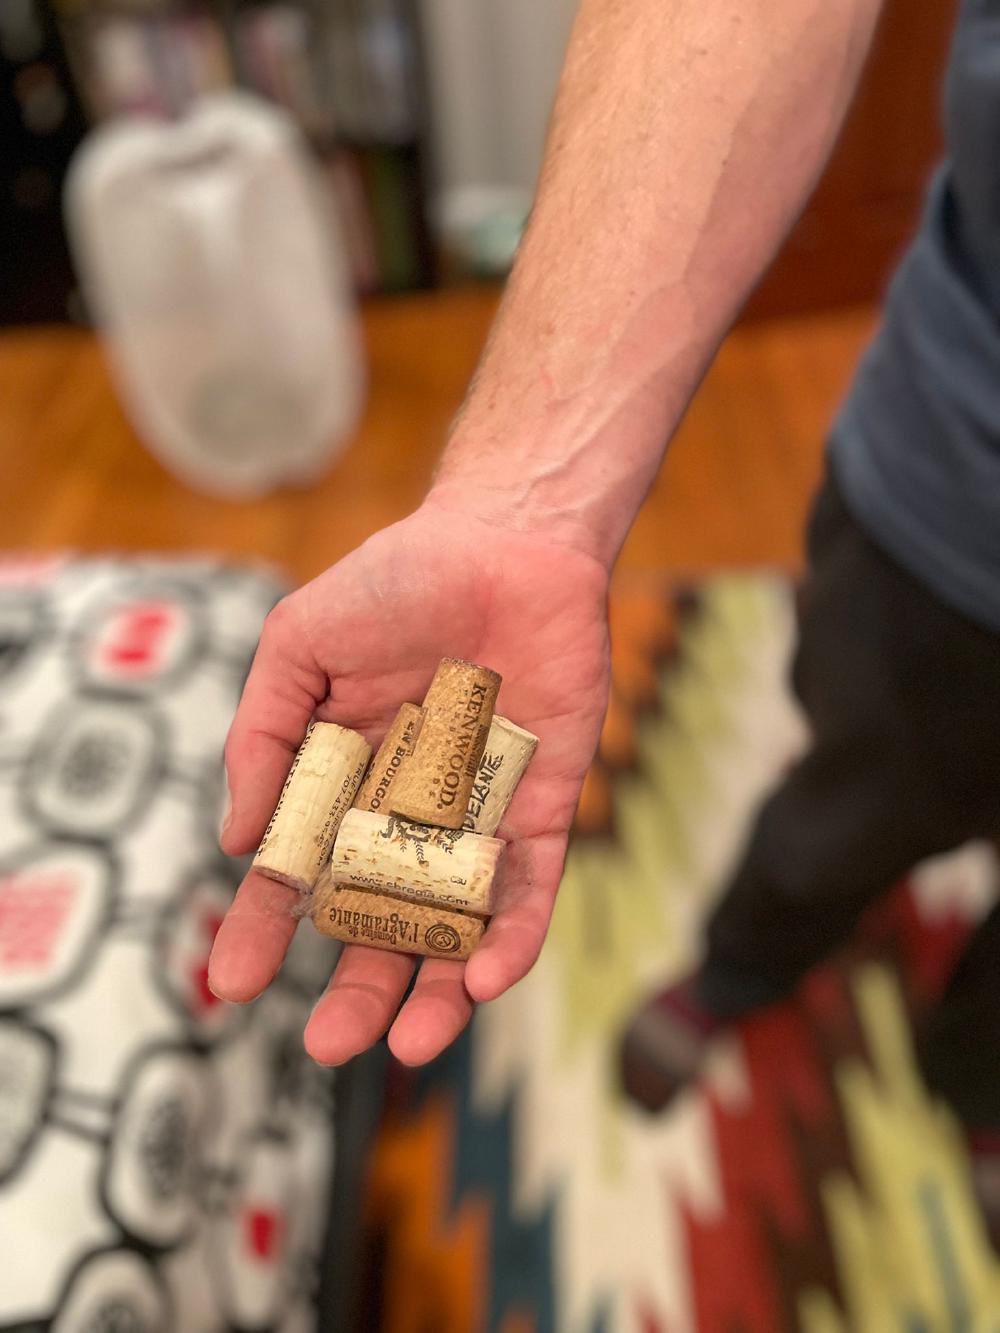 Matcha's hidden stash of corks